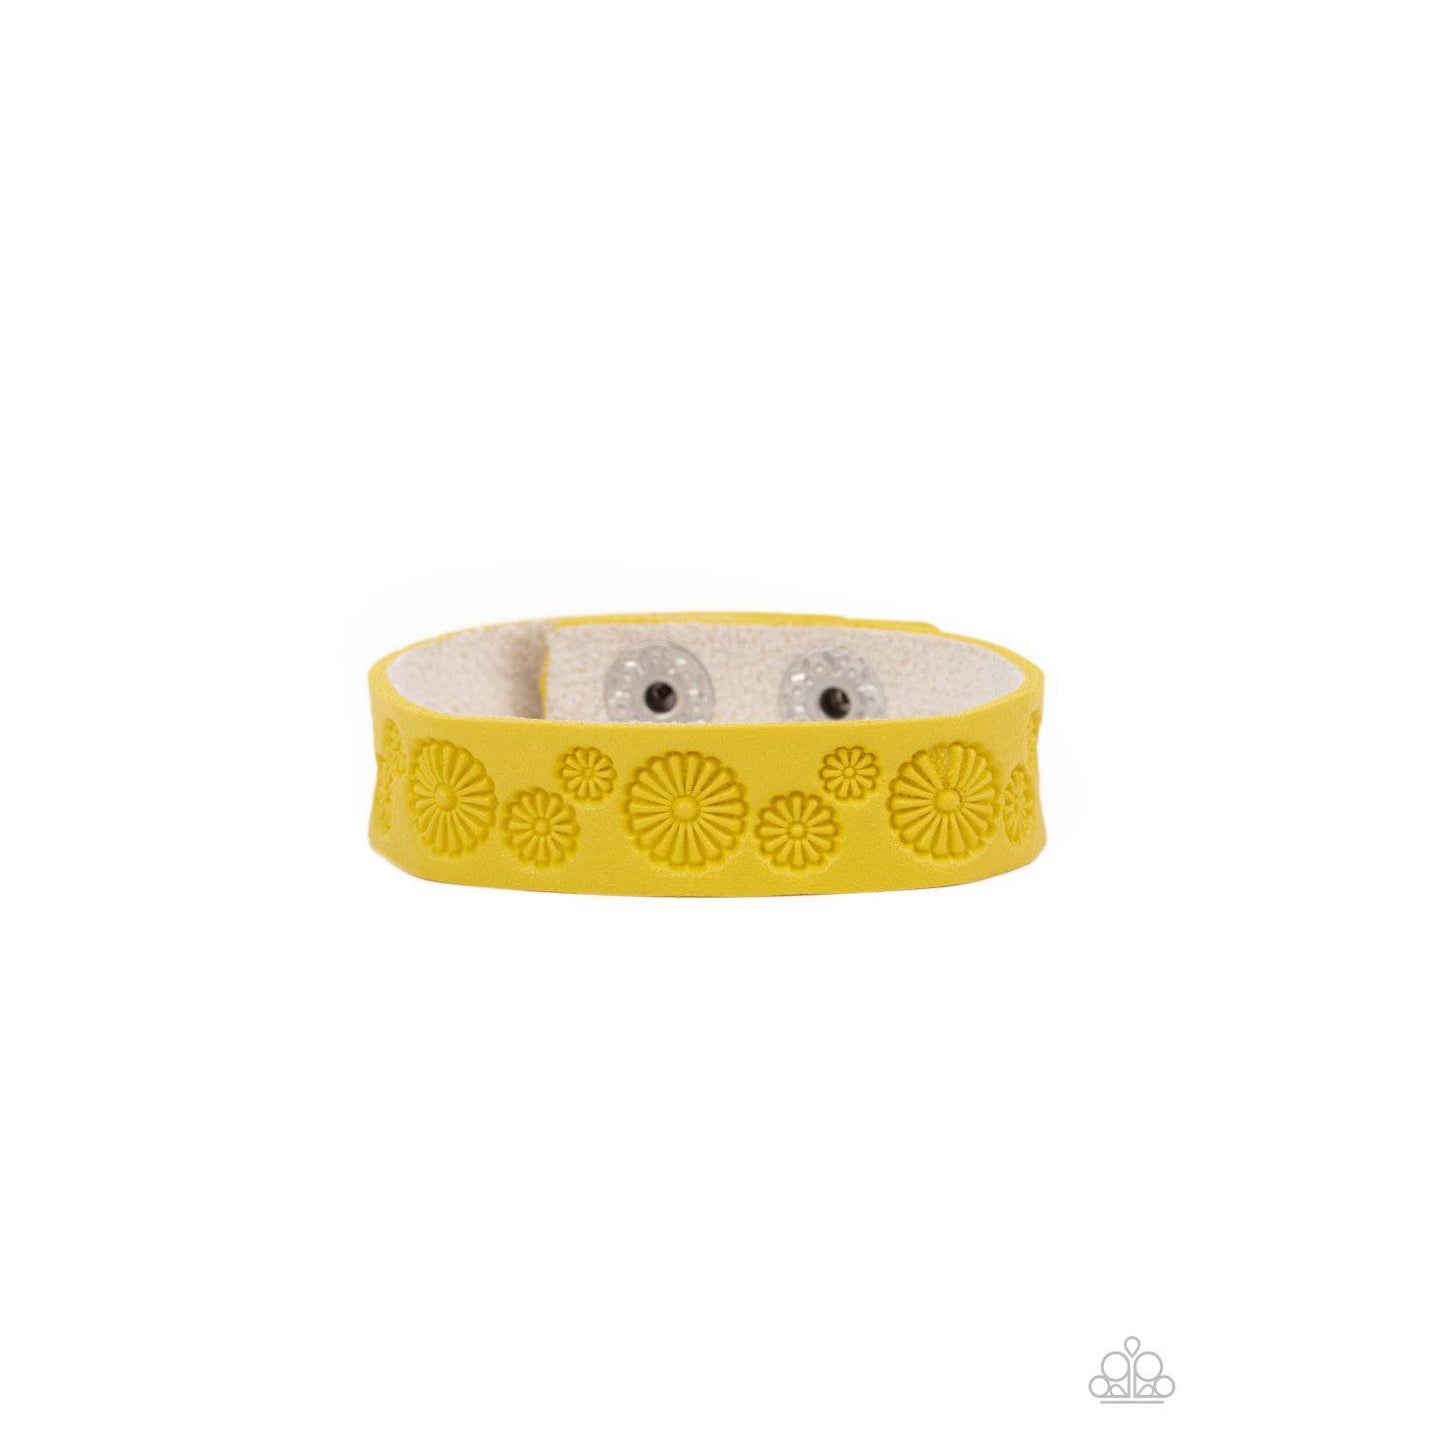 Follow The Wildflowers - Yellow Snap Bracelet - Paparazzi Accessories - GlaMarous Titi Jewels